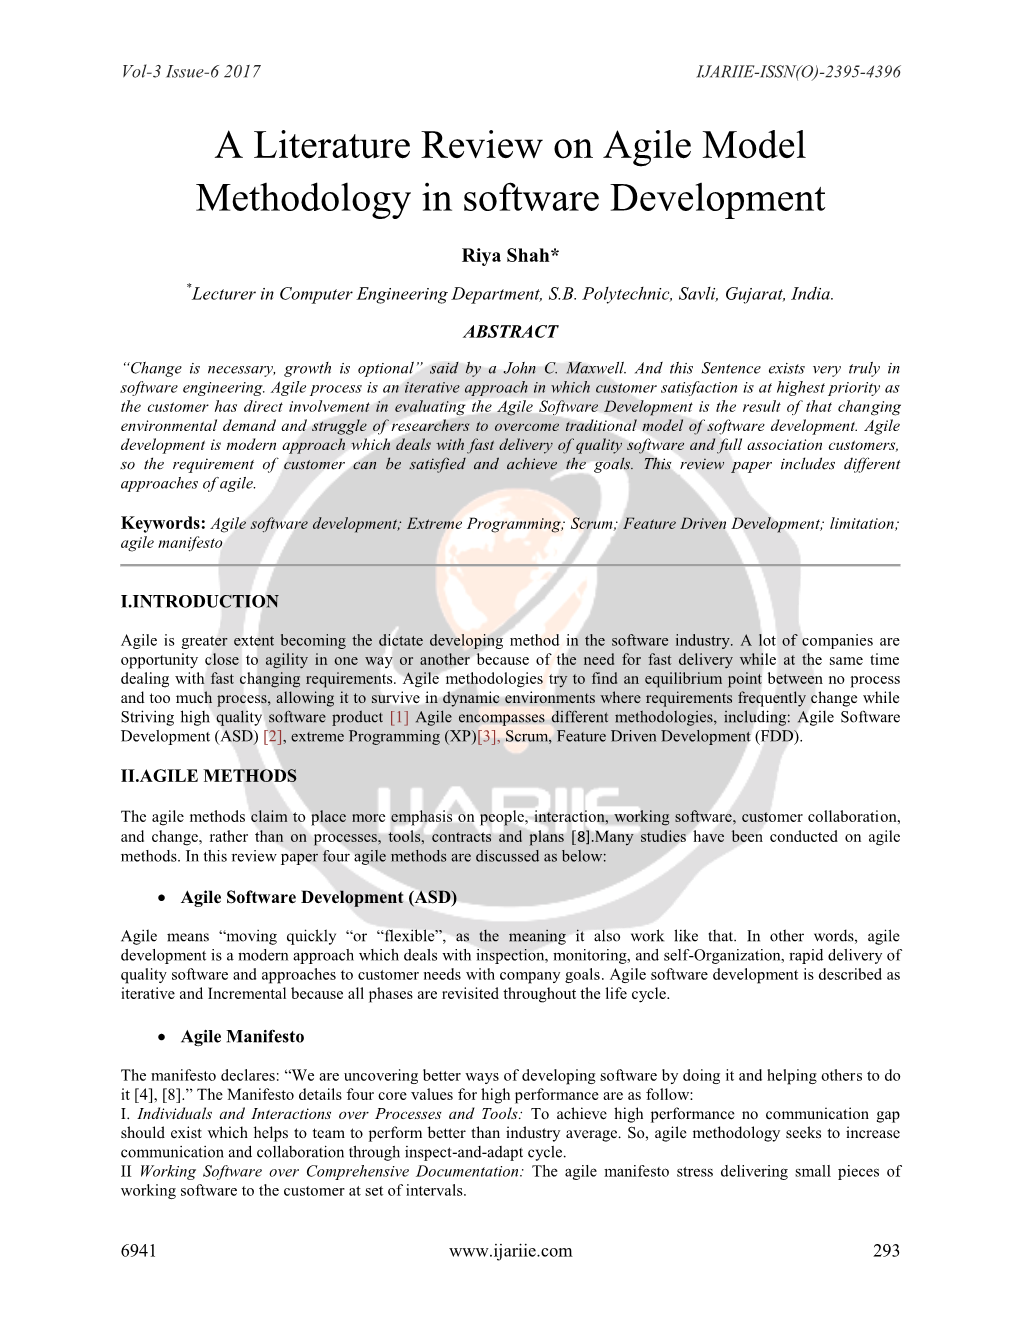 literature review software development methods